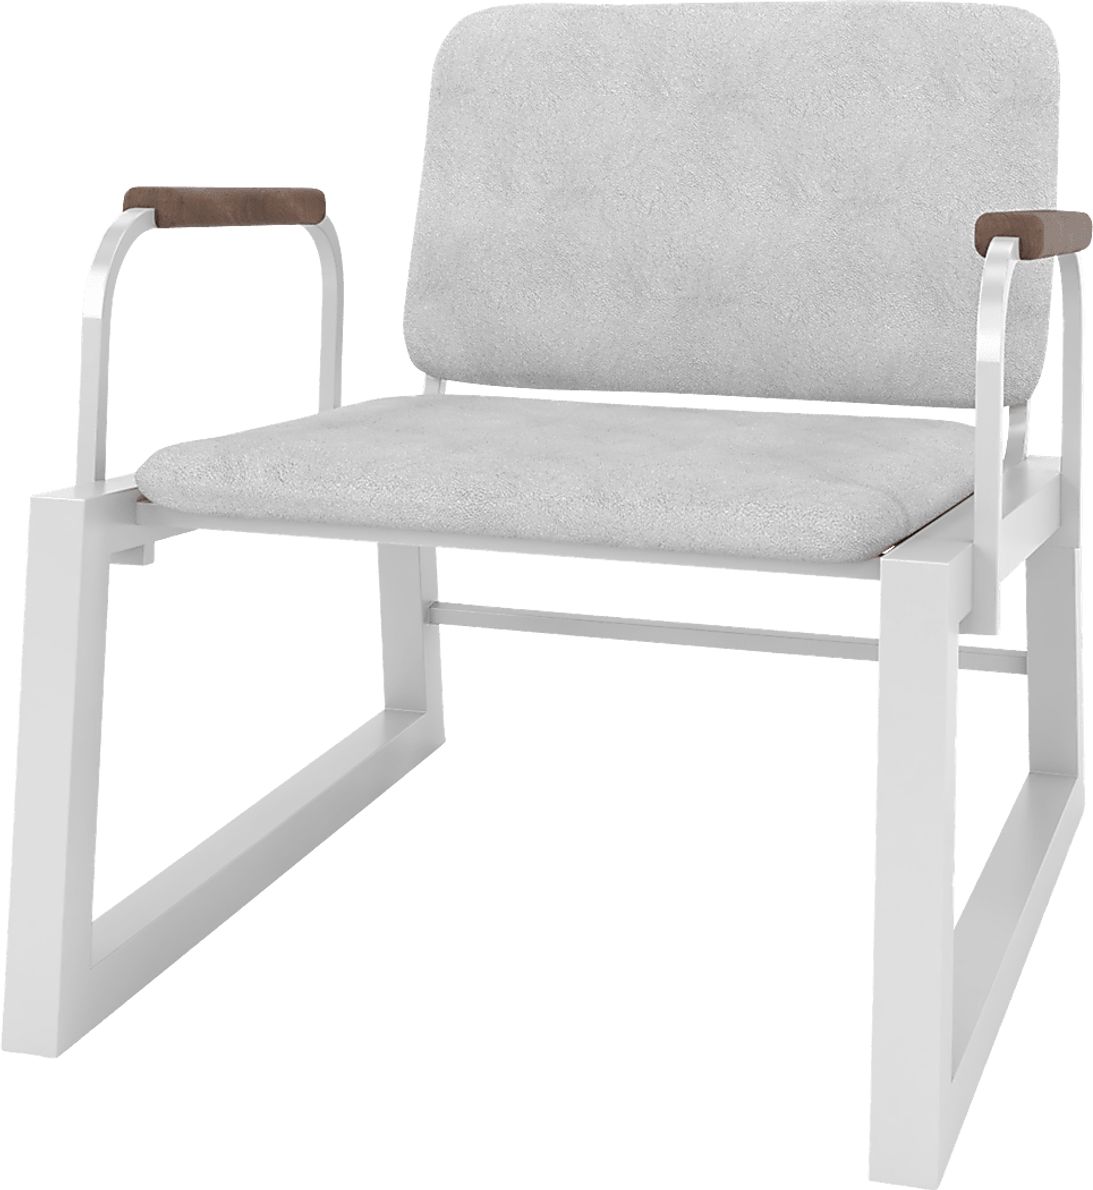 Doolan Accent Chair